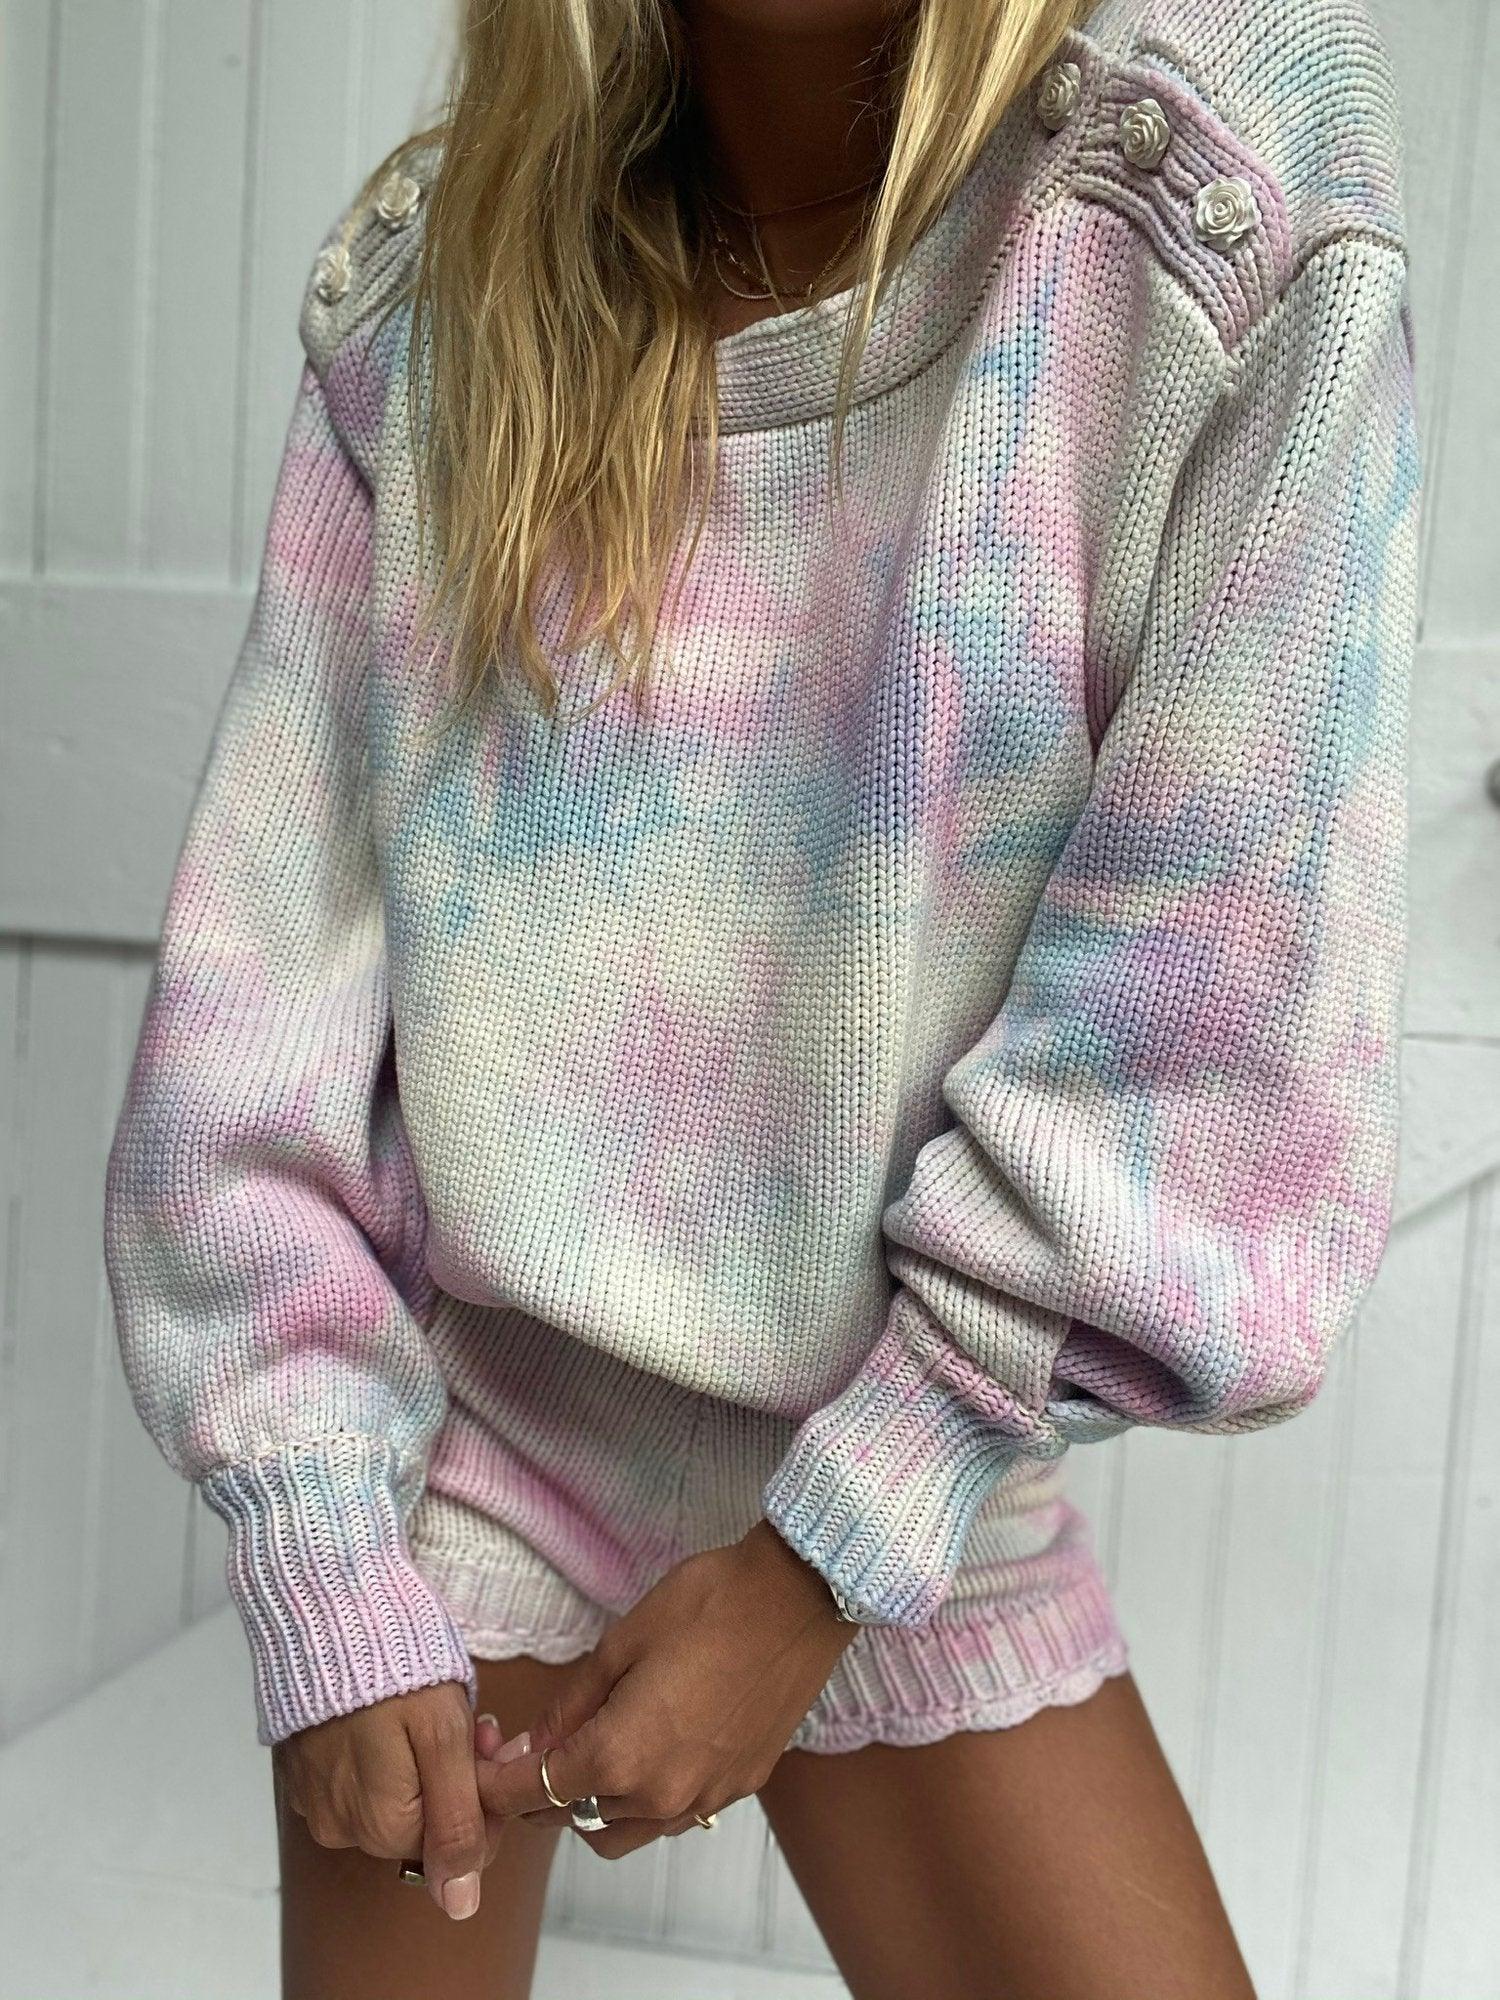 LoveShackFancy - Gallatin Tie-Dye Sweater in Cotton Candy - OutDazl